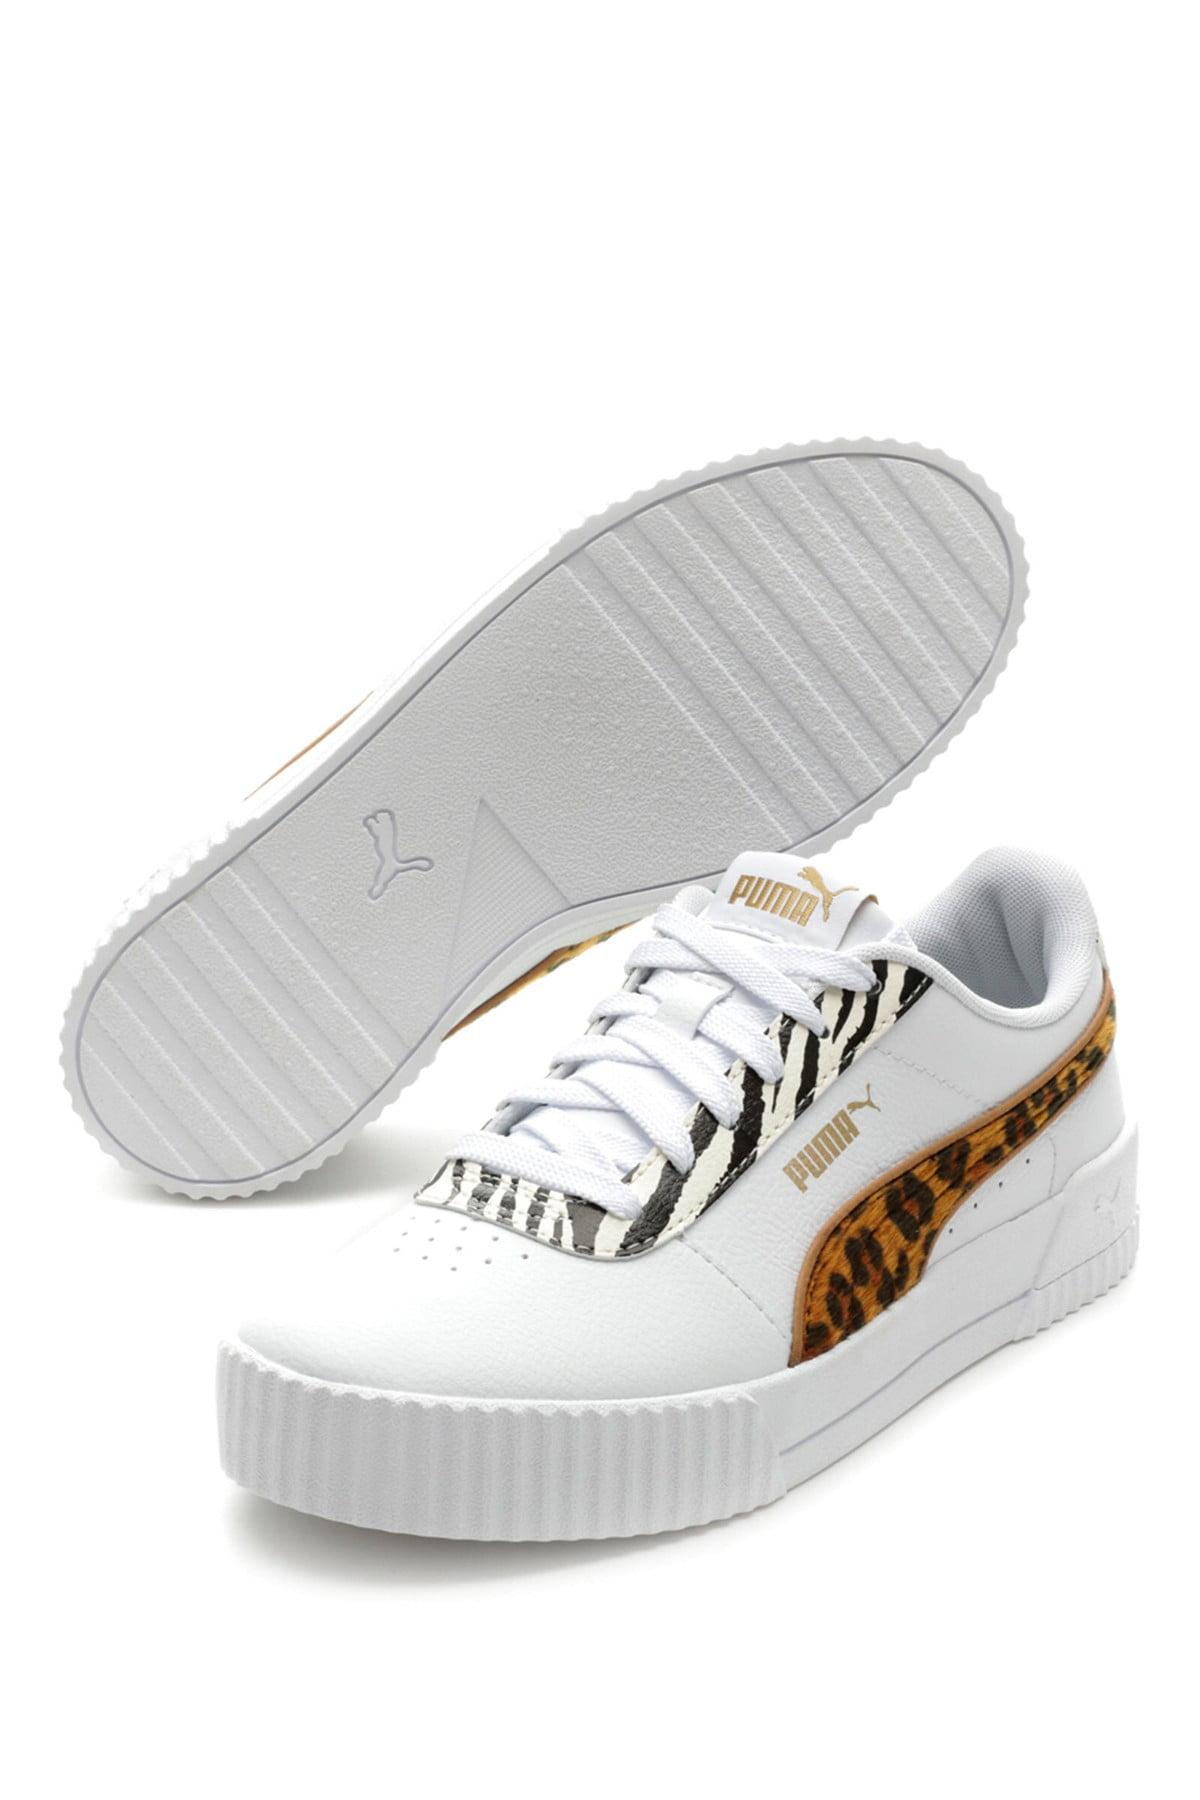 PUMA Carina Animal Mix Print Sneaker in White - Lyst